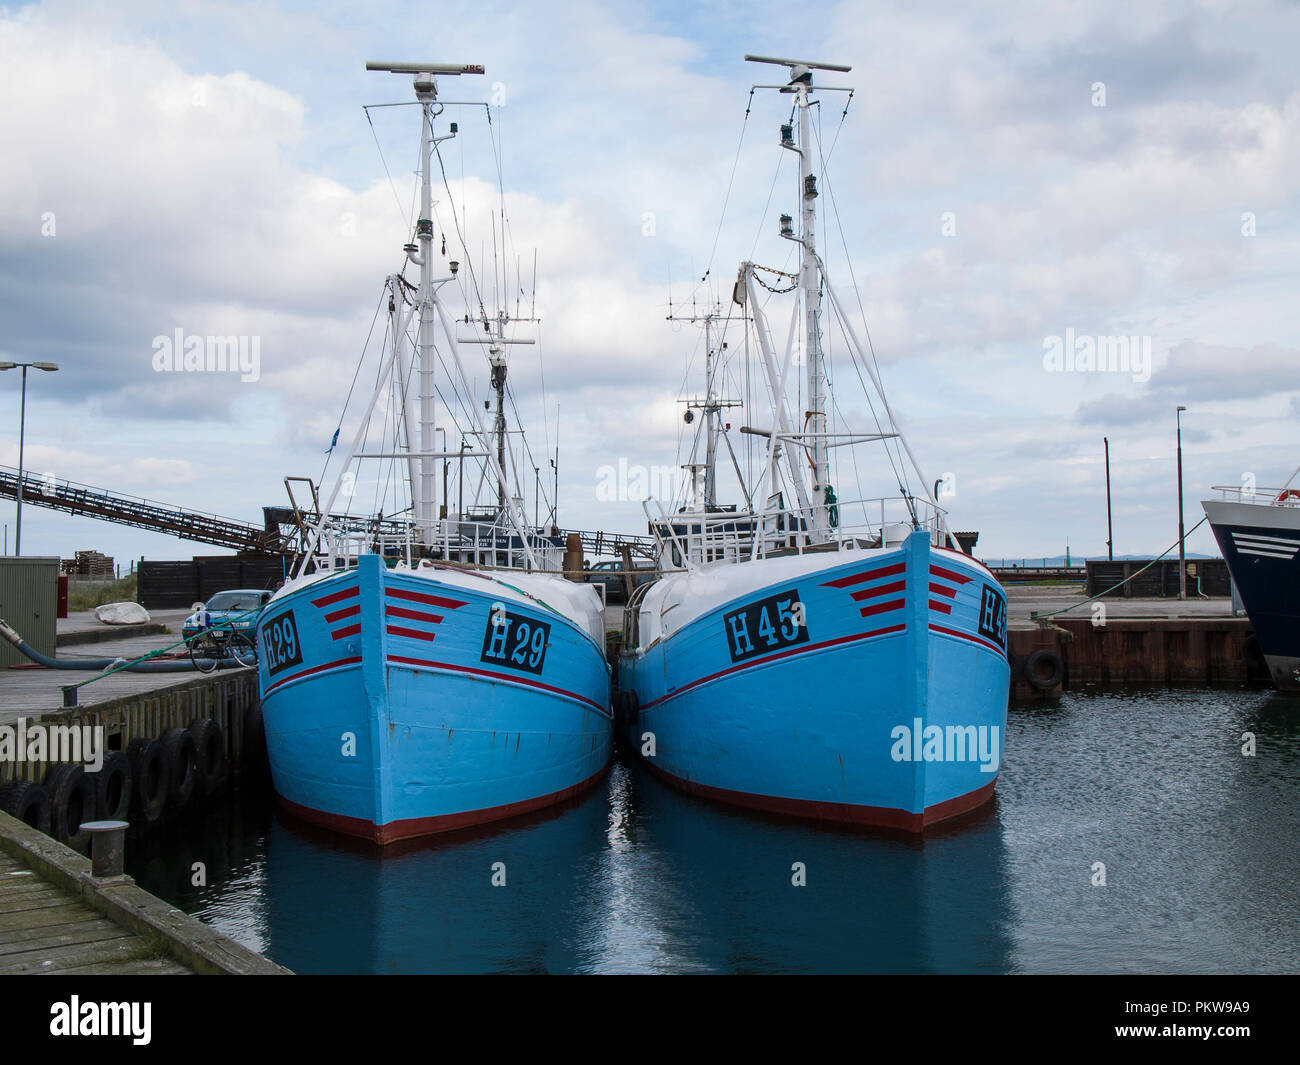 Fishing smacks in the Fishing Port of Gilleleje, Denmark. Stock Photo